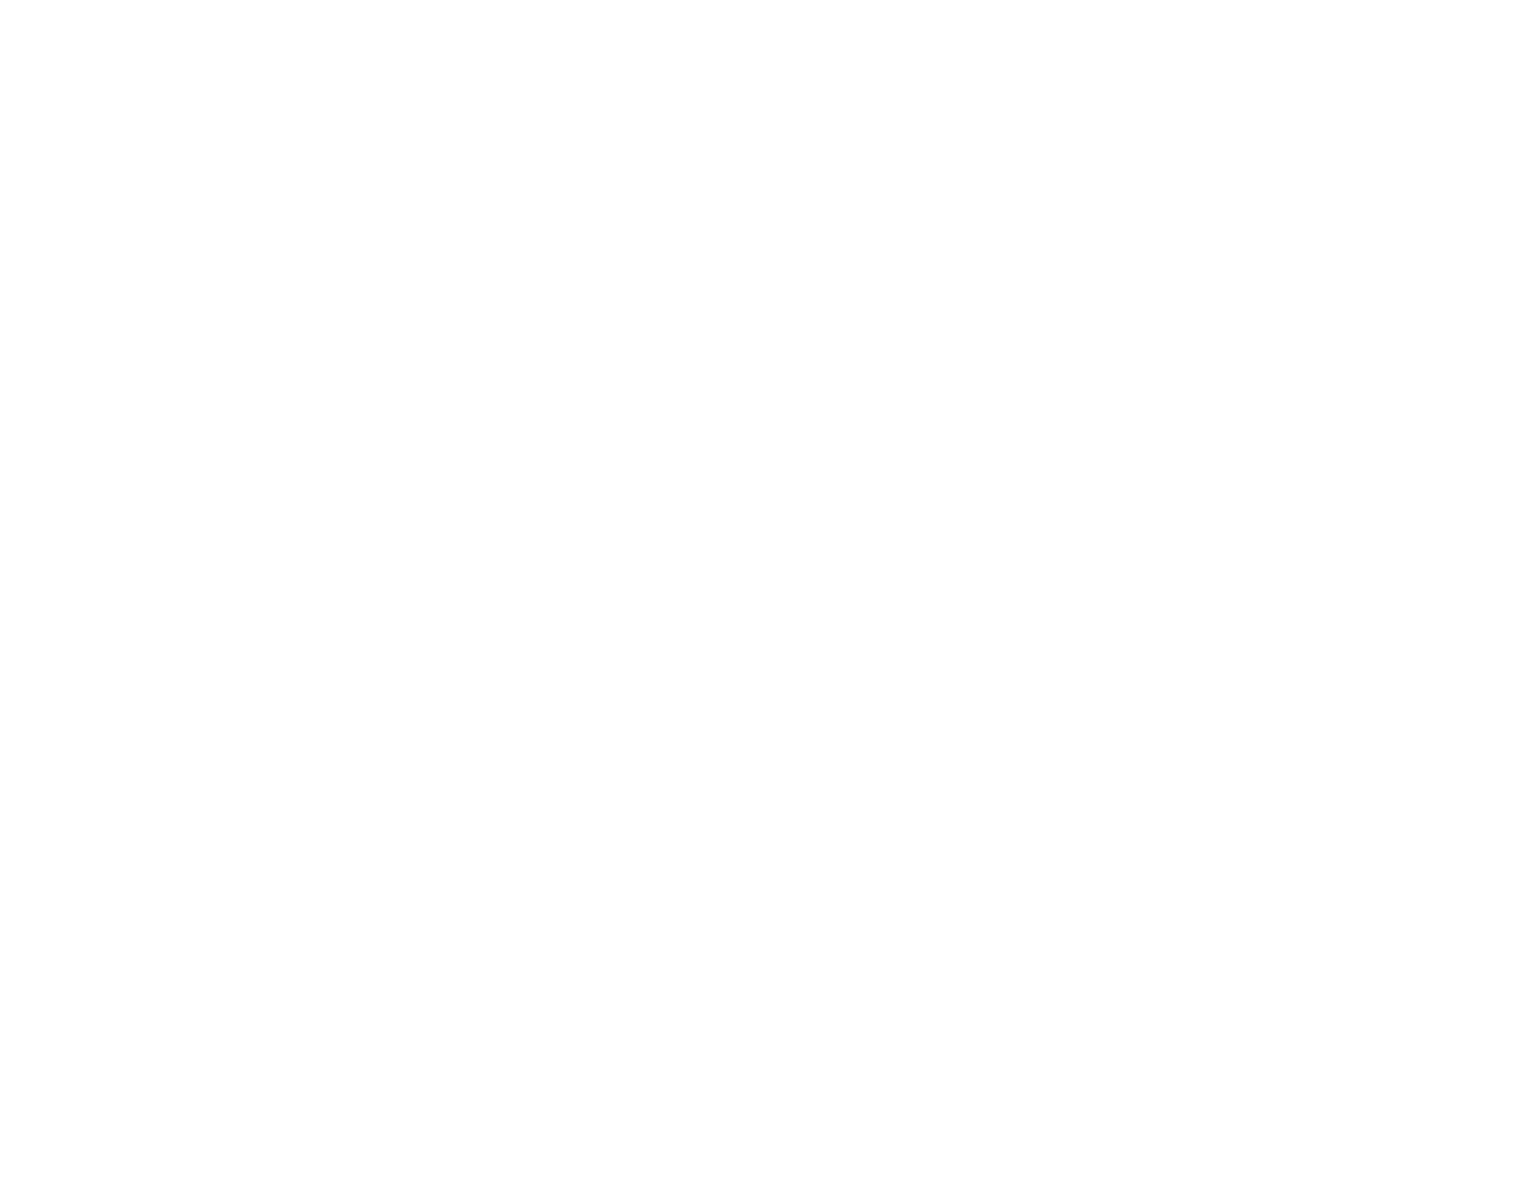 Softstar Entertainment logo large for dark backgrounds (transparent PNG)